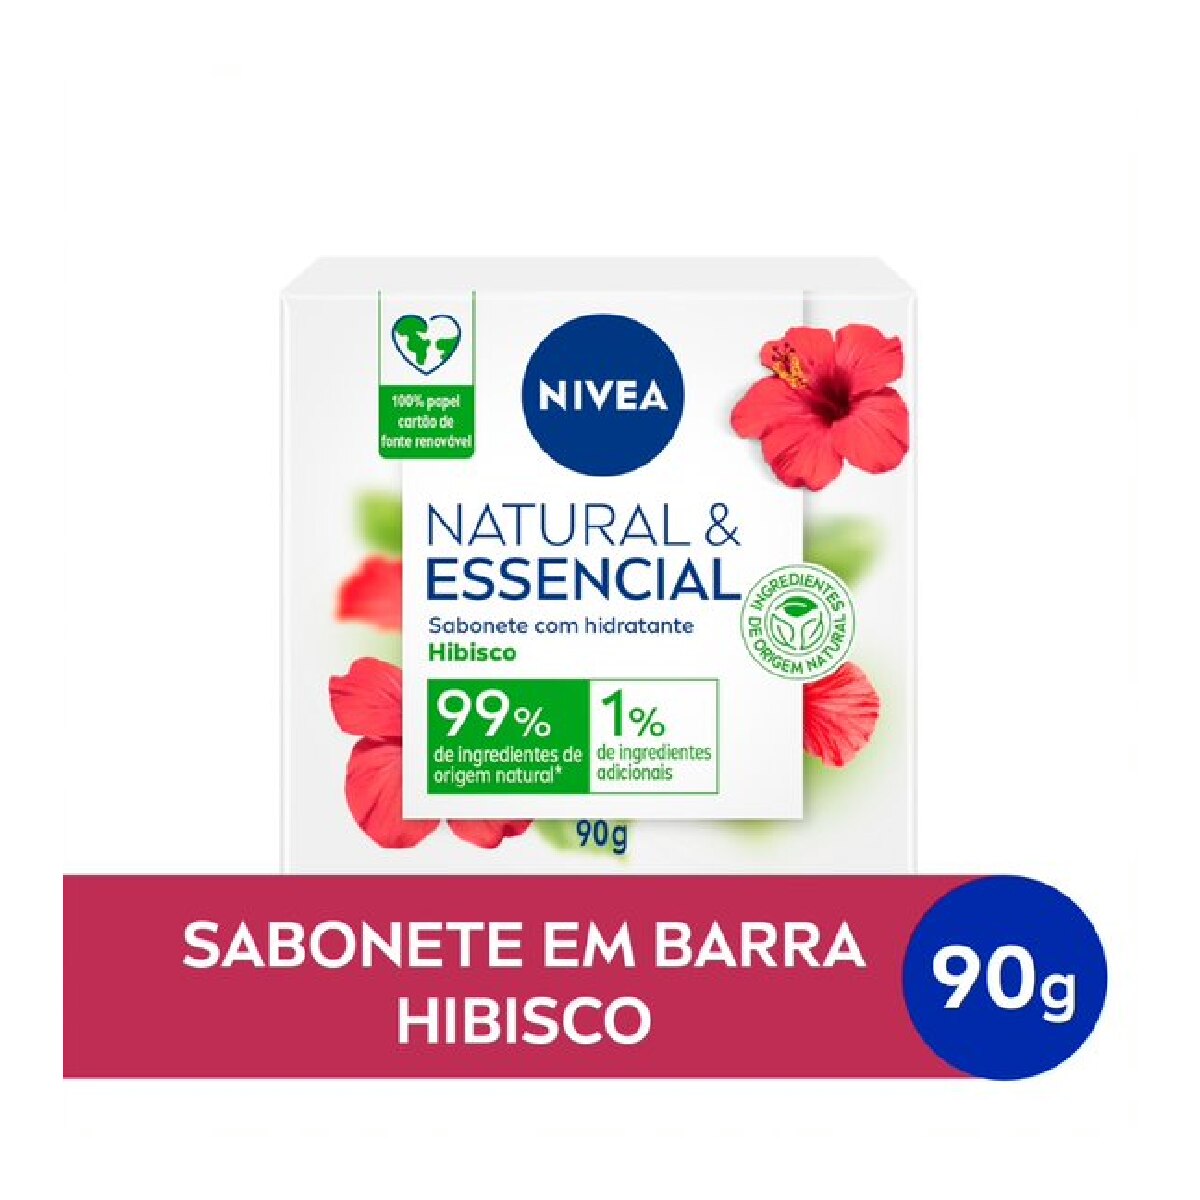 Sabonete em Barra Nivea Natural & Essencial Hibisco 90g